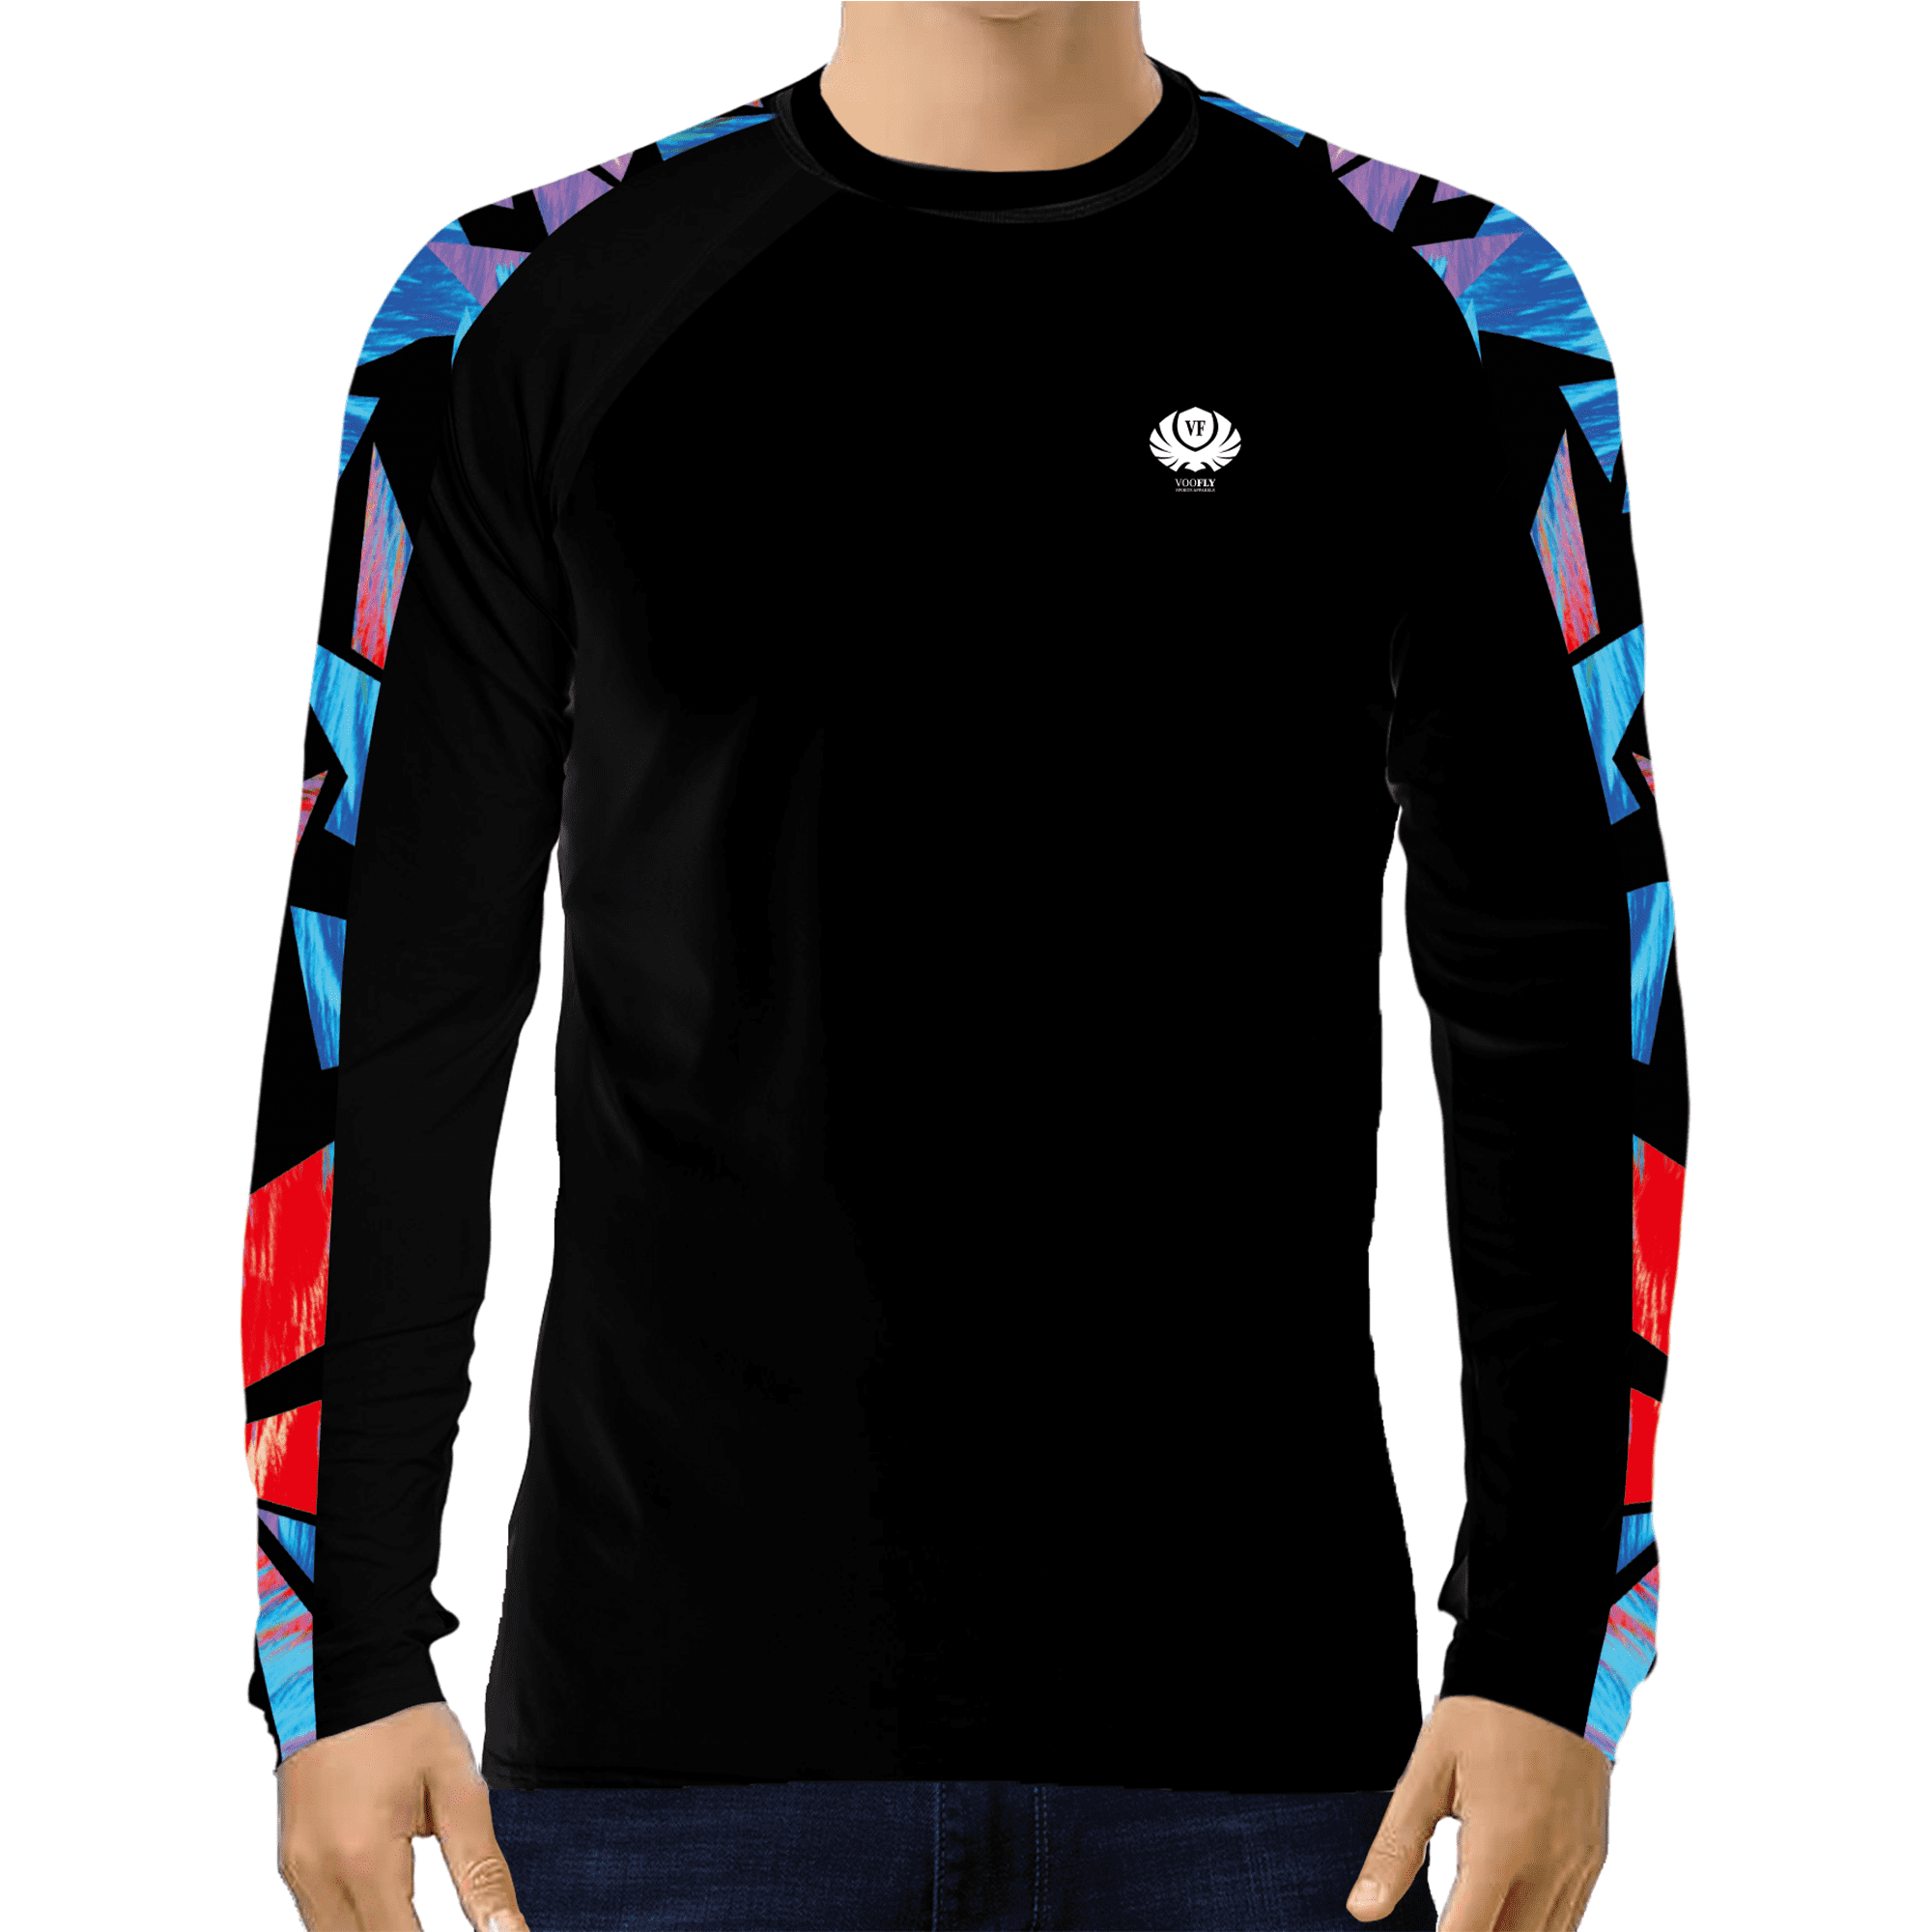 Voofly Men's Sun Shirts Black Long Sleeve UV Shirts Tops ,Lightweight  Moisture Wicking UPF 50+ Sun Protection Shirt, Rash Guard Fishing Shirt for  Running Swimming Hiking L 